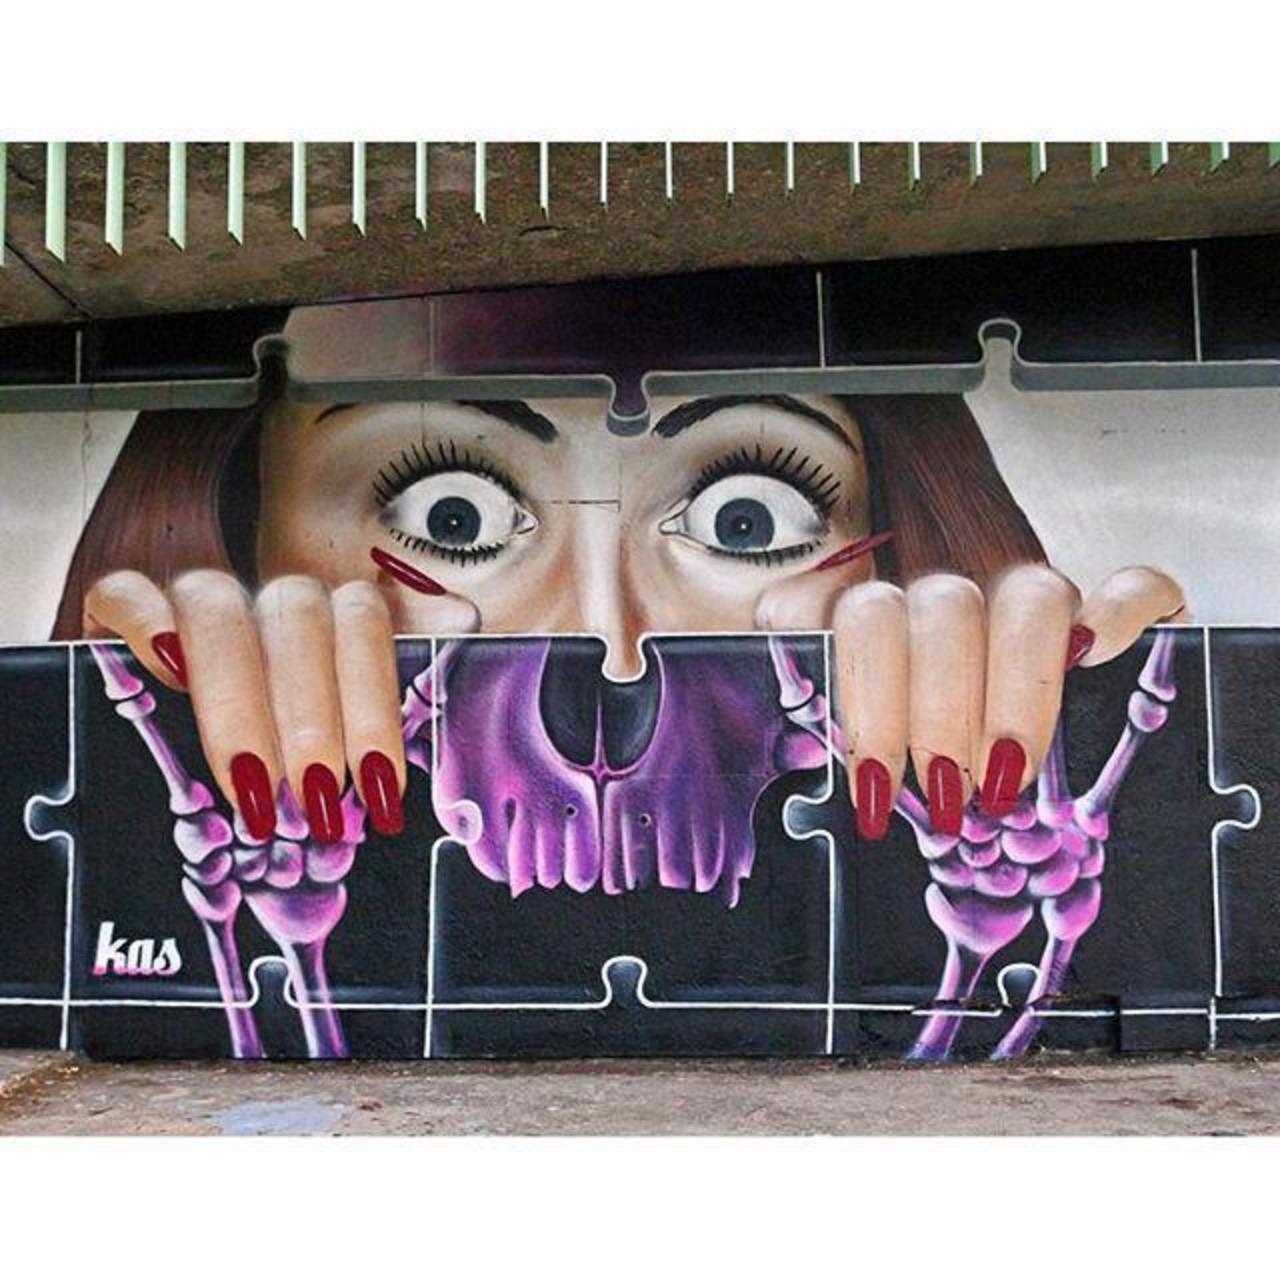 RT @AuKeats: #streetart Open your #kasartofficial #lyon #france #switch #graffiti #bedifferent #arte #art https://t.co/AaMRqZZ1sI